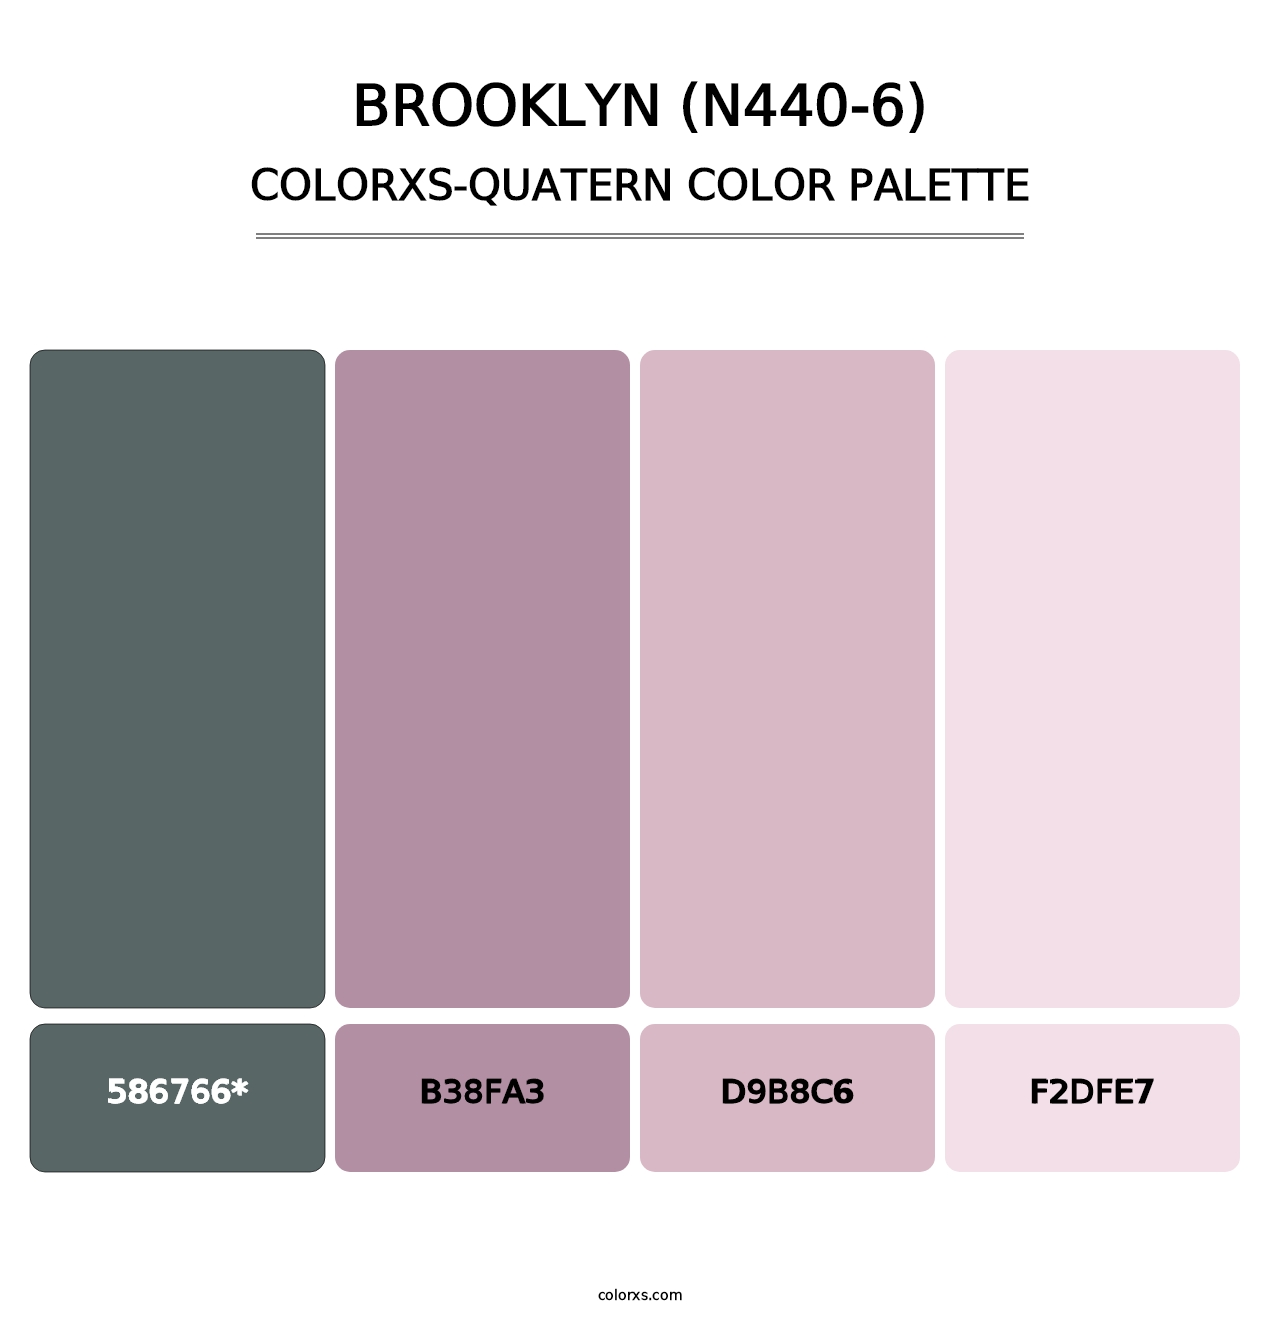 Brooklyn (N440-6) - Colorxs Quatern Palette